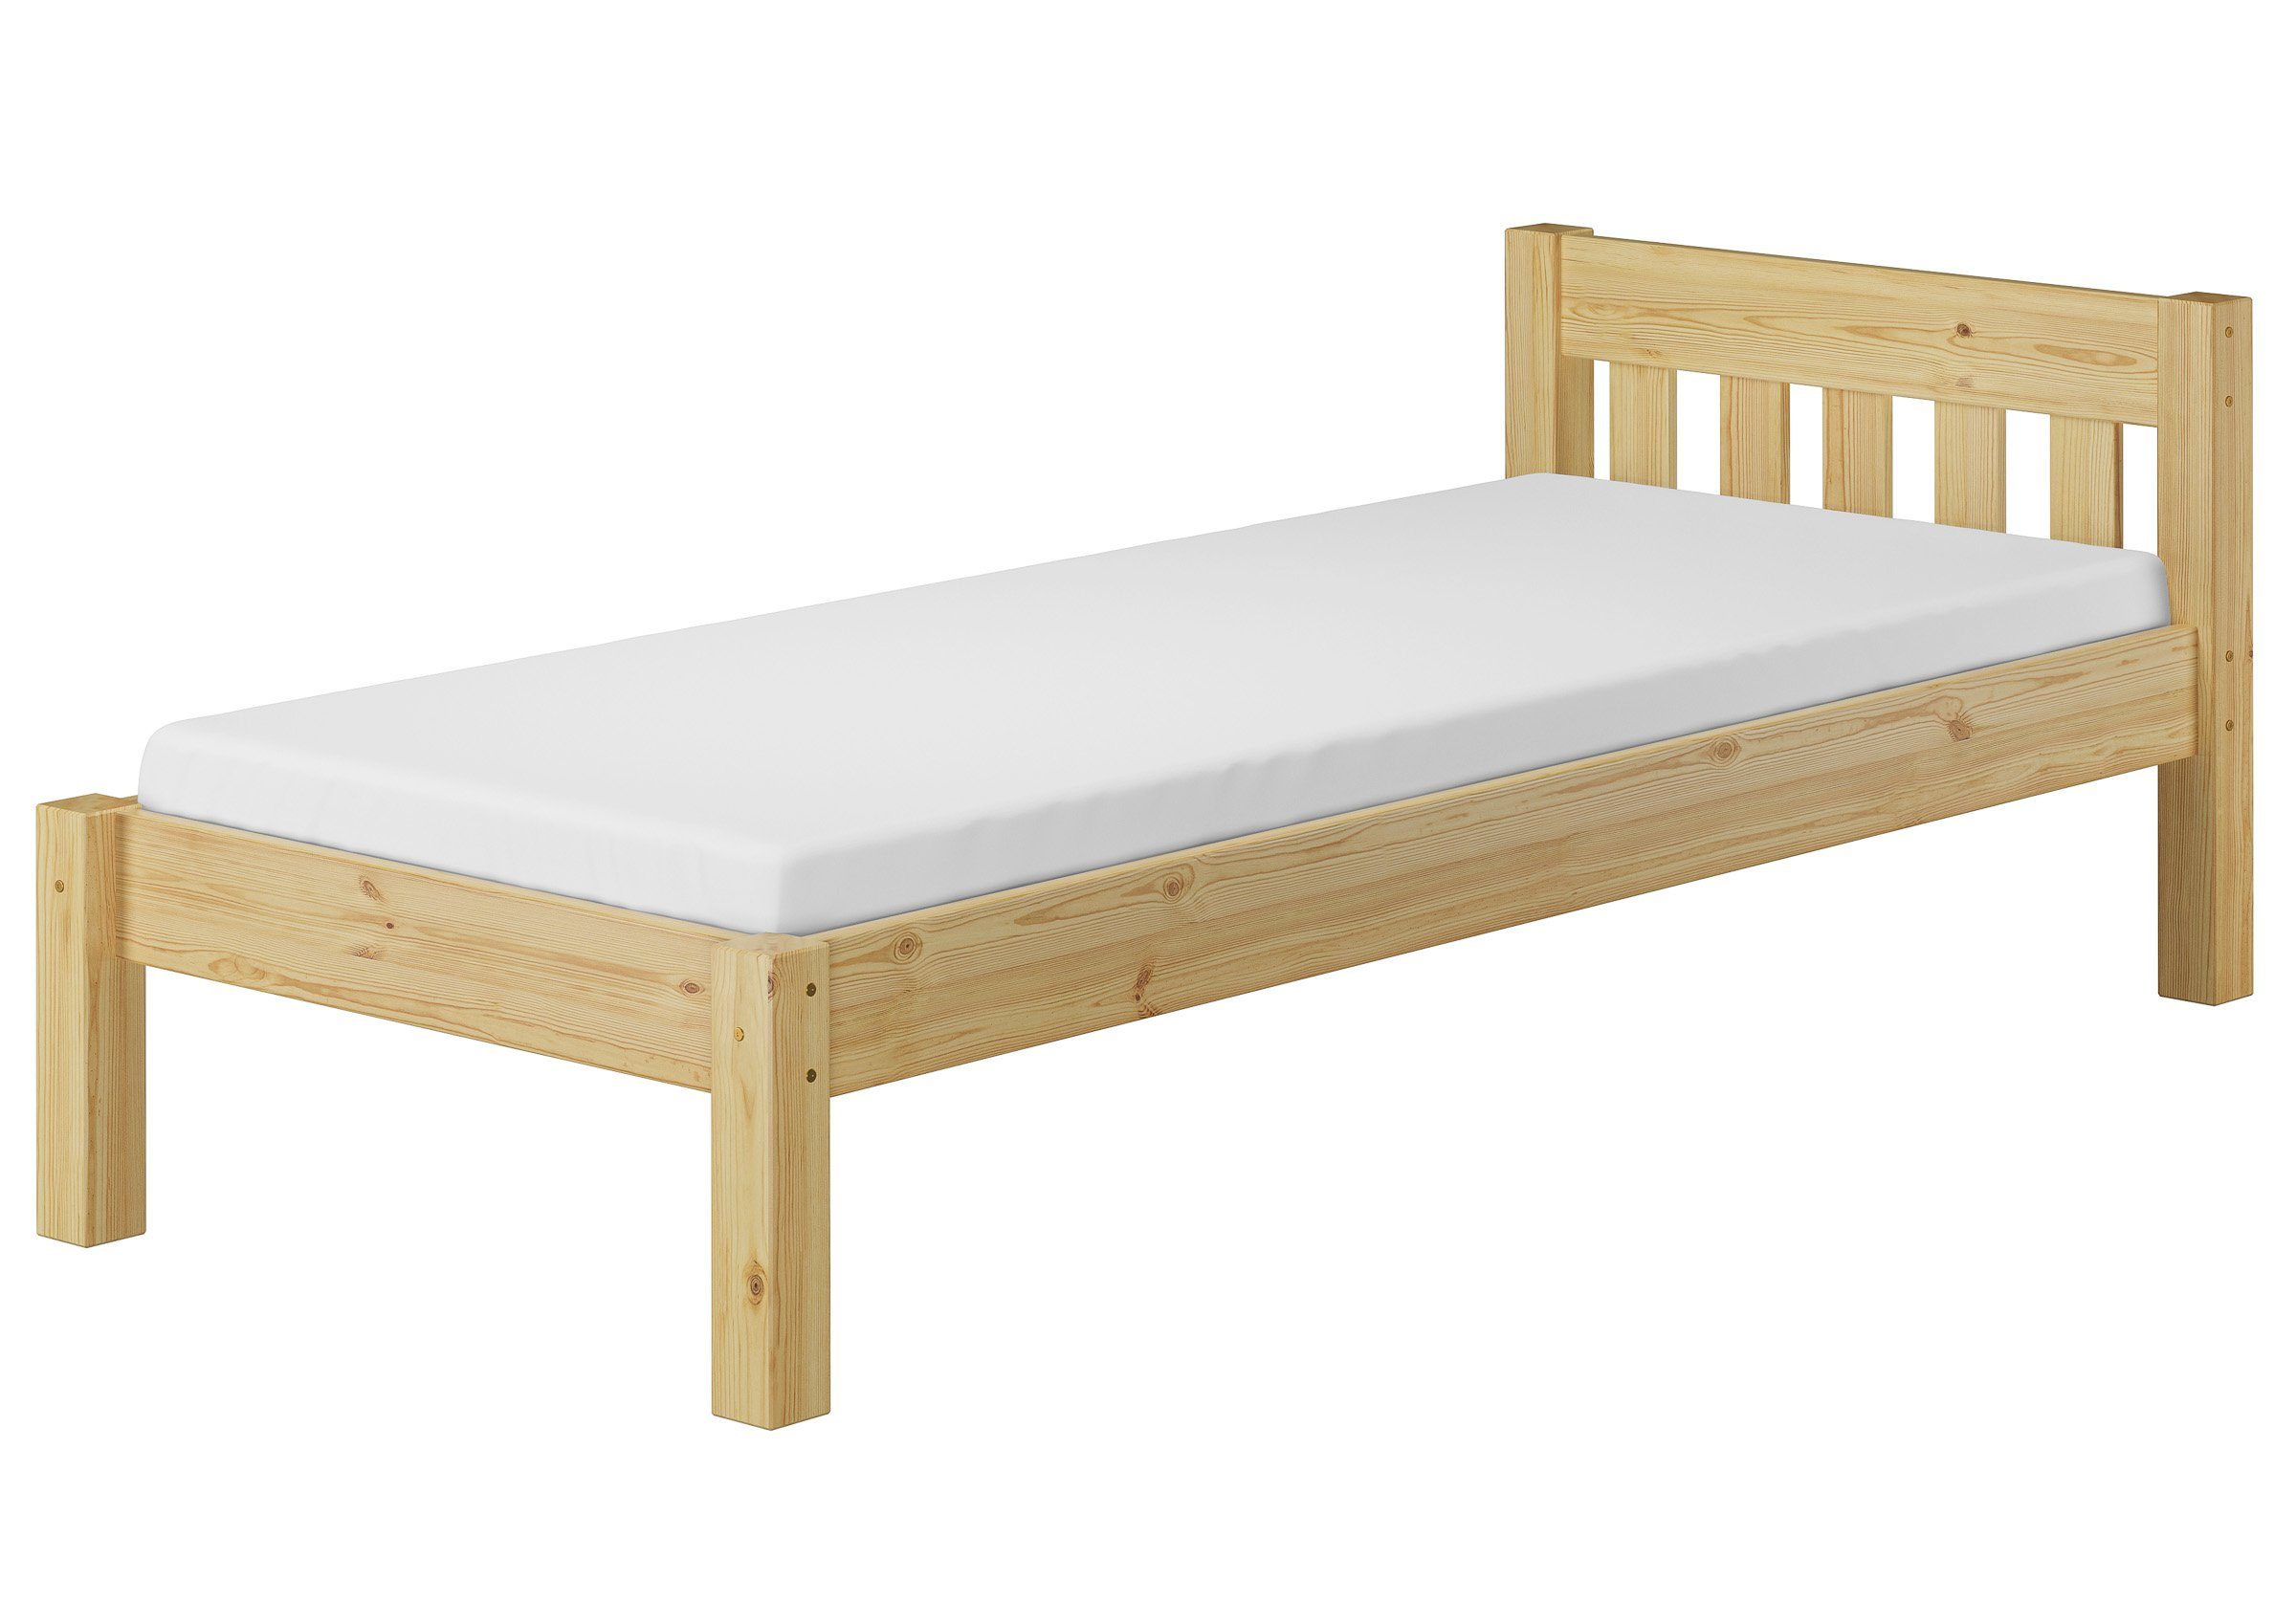 ERST-HOLZ Bett Kinderbett 80x200 Federholzrahmen Massivholz und mit Matratze, Kieferfarblos lackiert